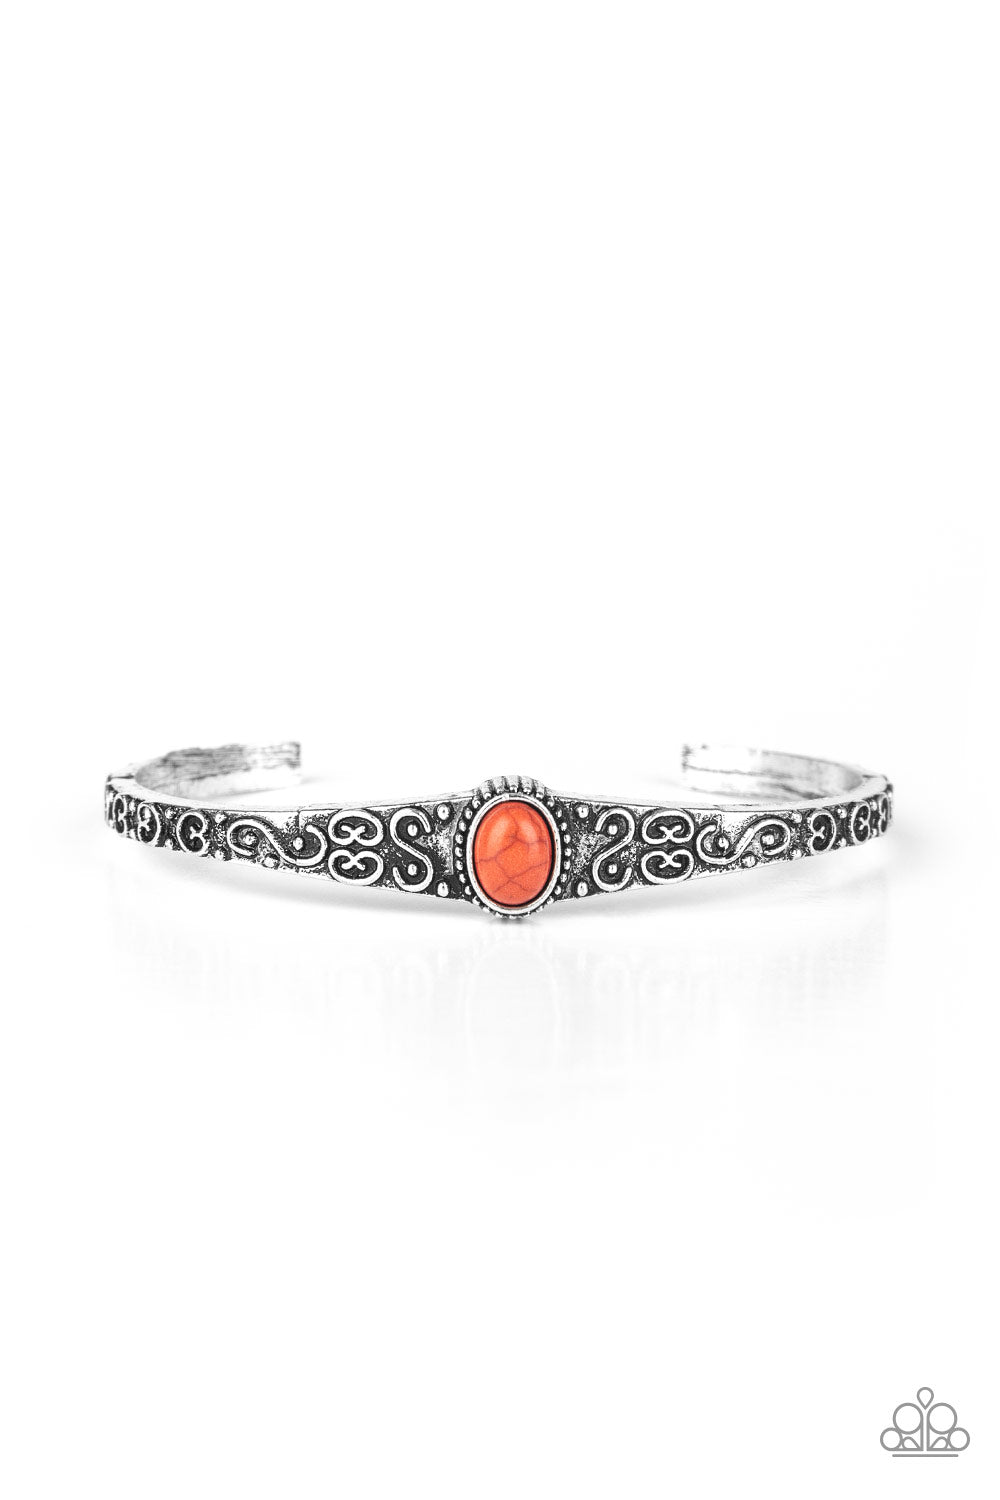 Make Your Own Path Orange Stone Cuff Bracelet - Paparazzi Accessories